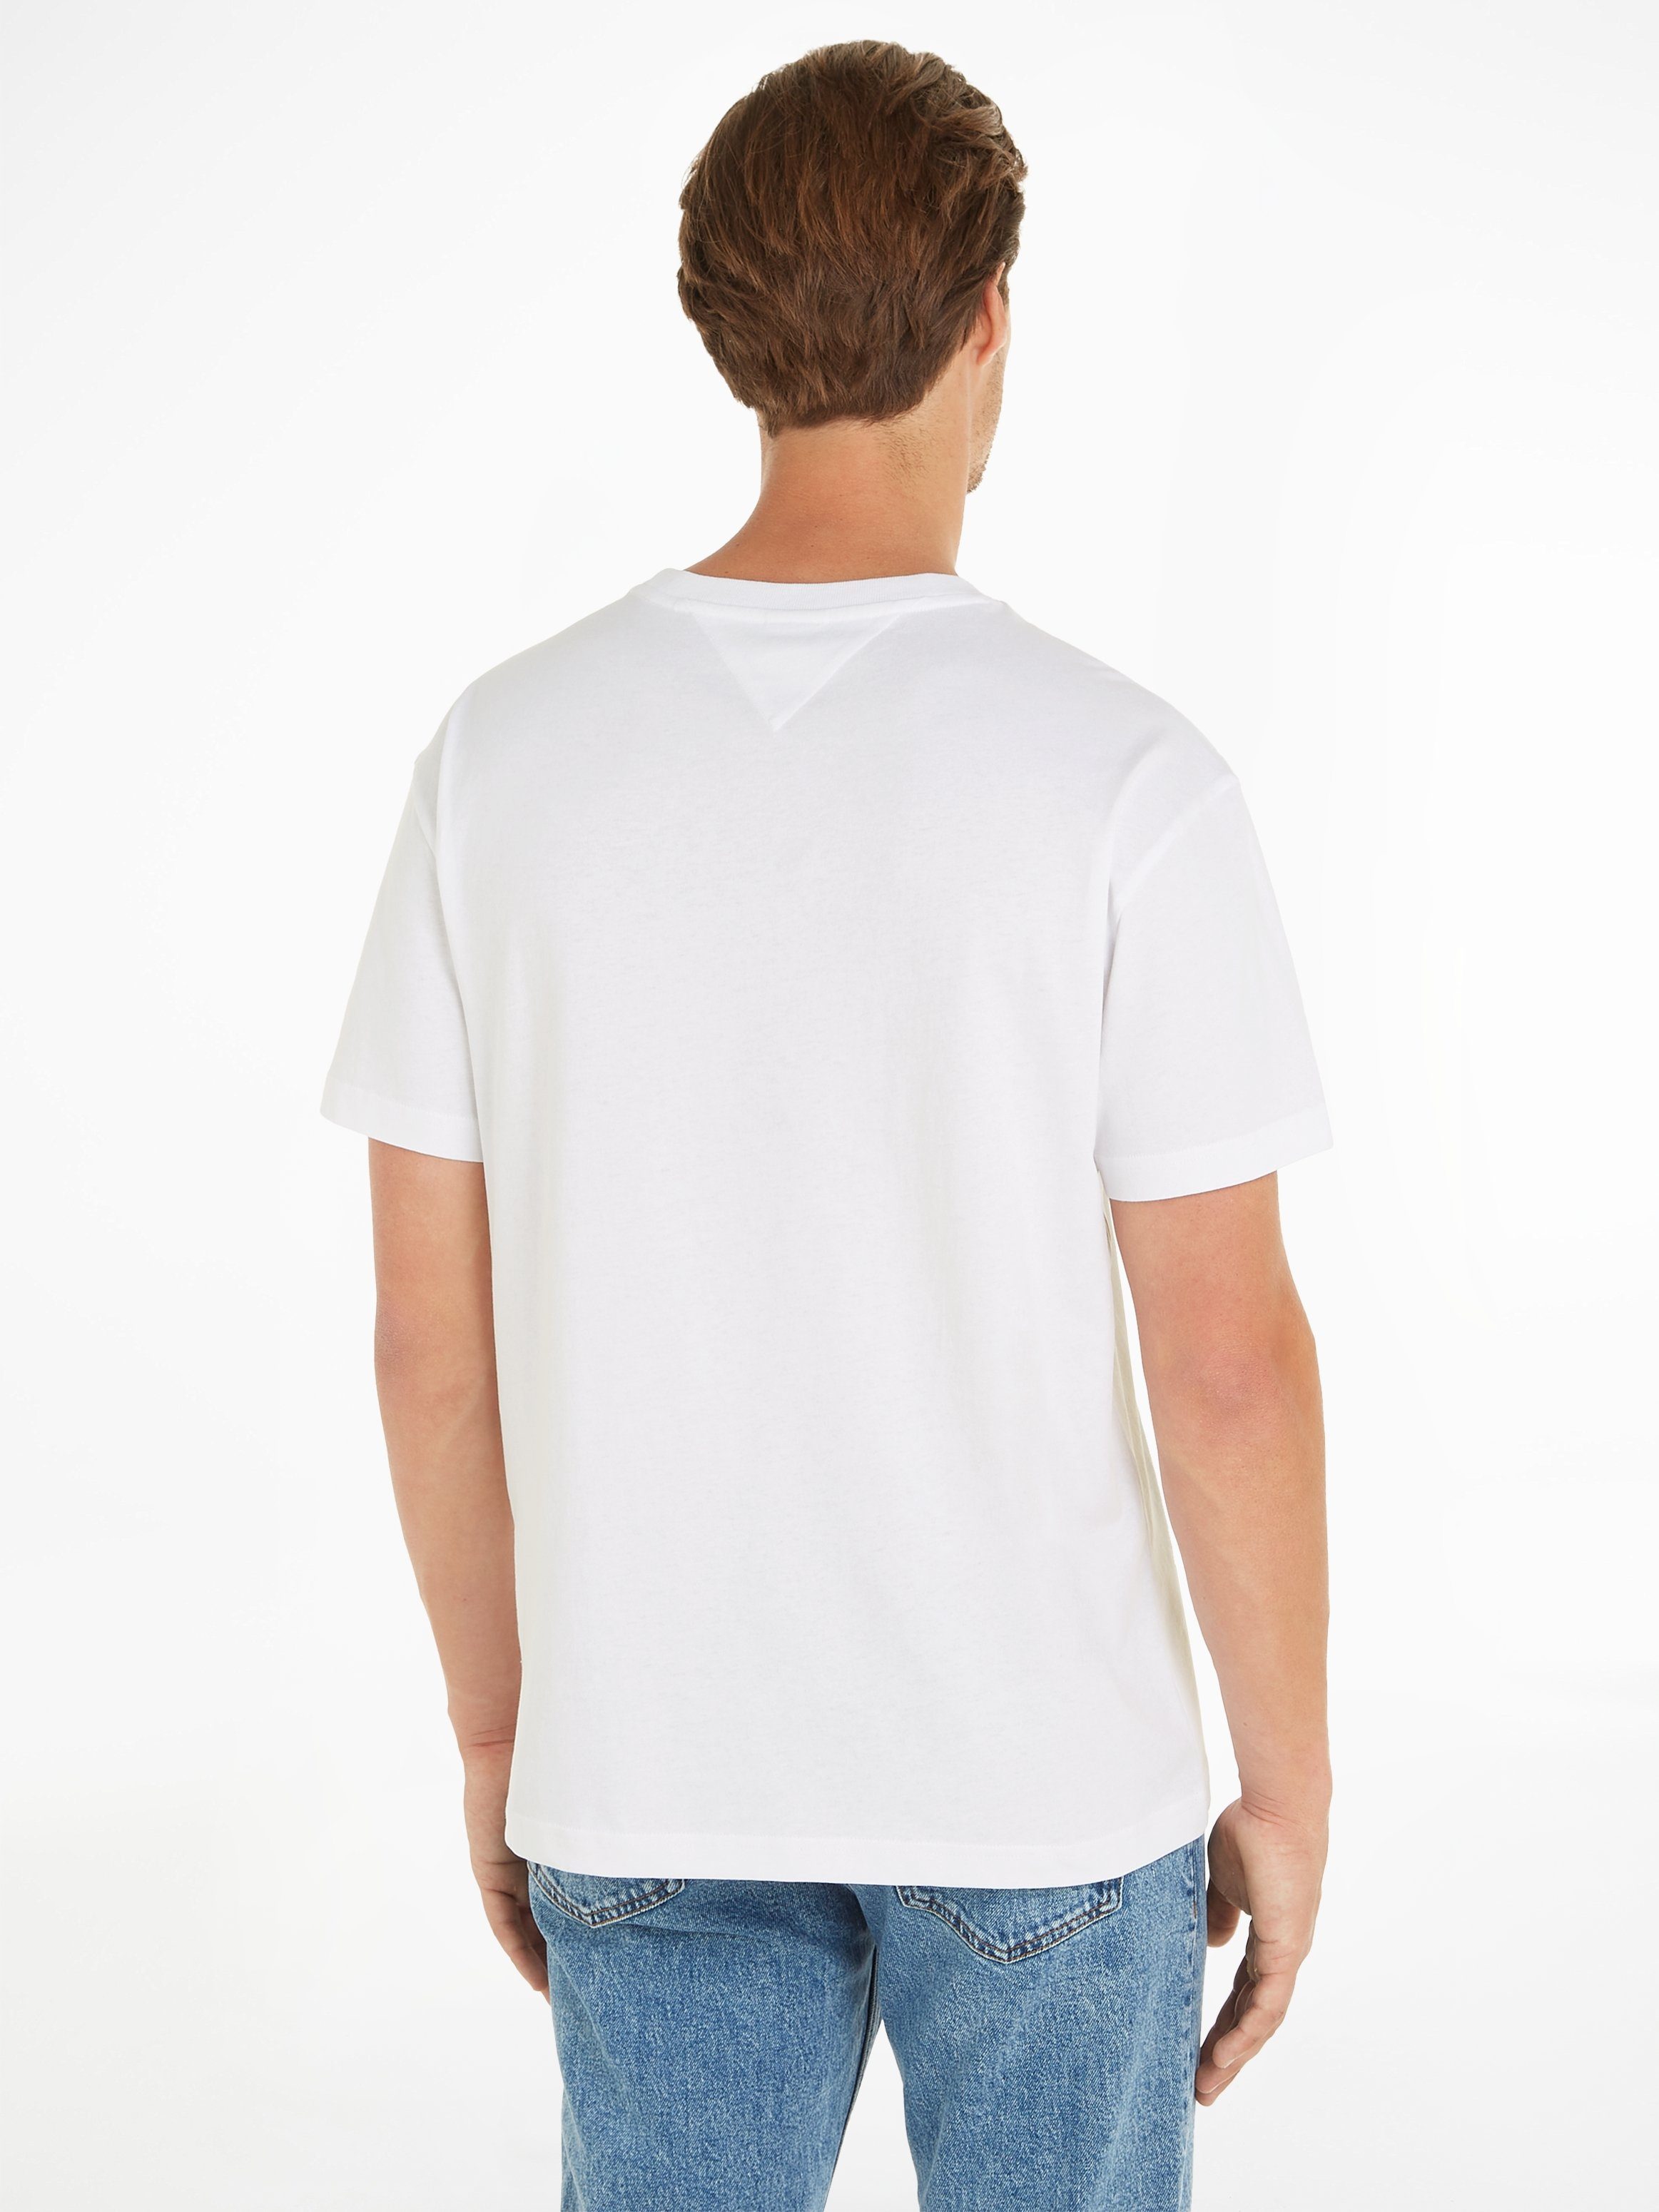 White REG Tommy Logostickerei TEE T-Shirt SIGNATURE TJM Jeans EXT mit